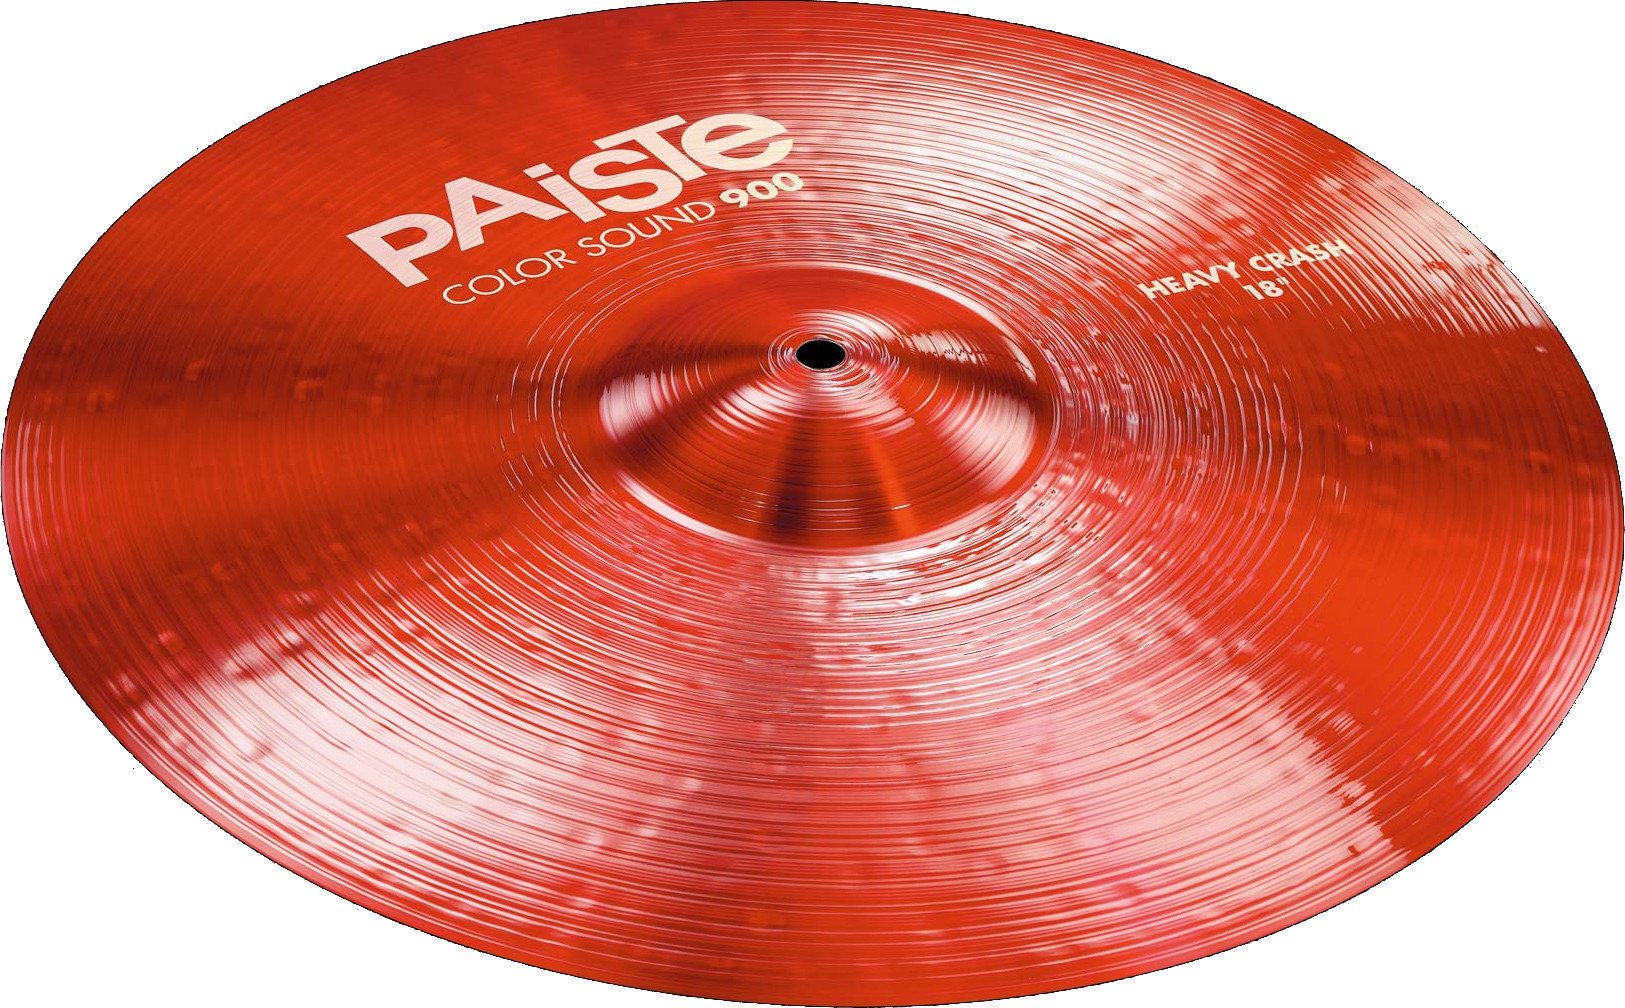 Cymbale crash Paiste Color Sound 900  Heavy Cymbale crash 20" Rouge